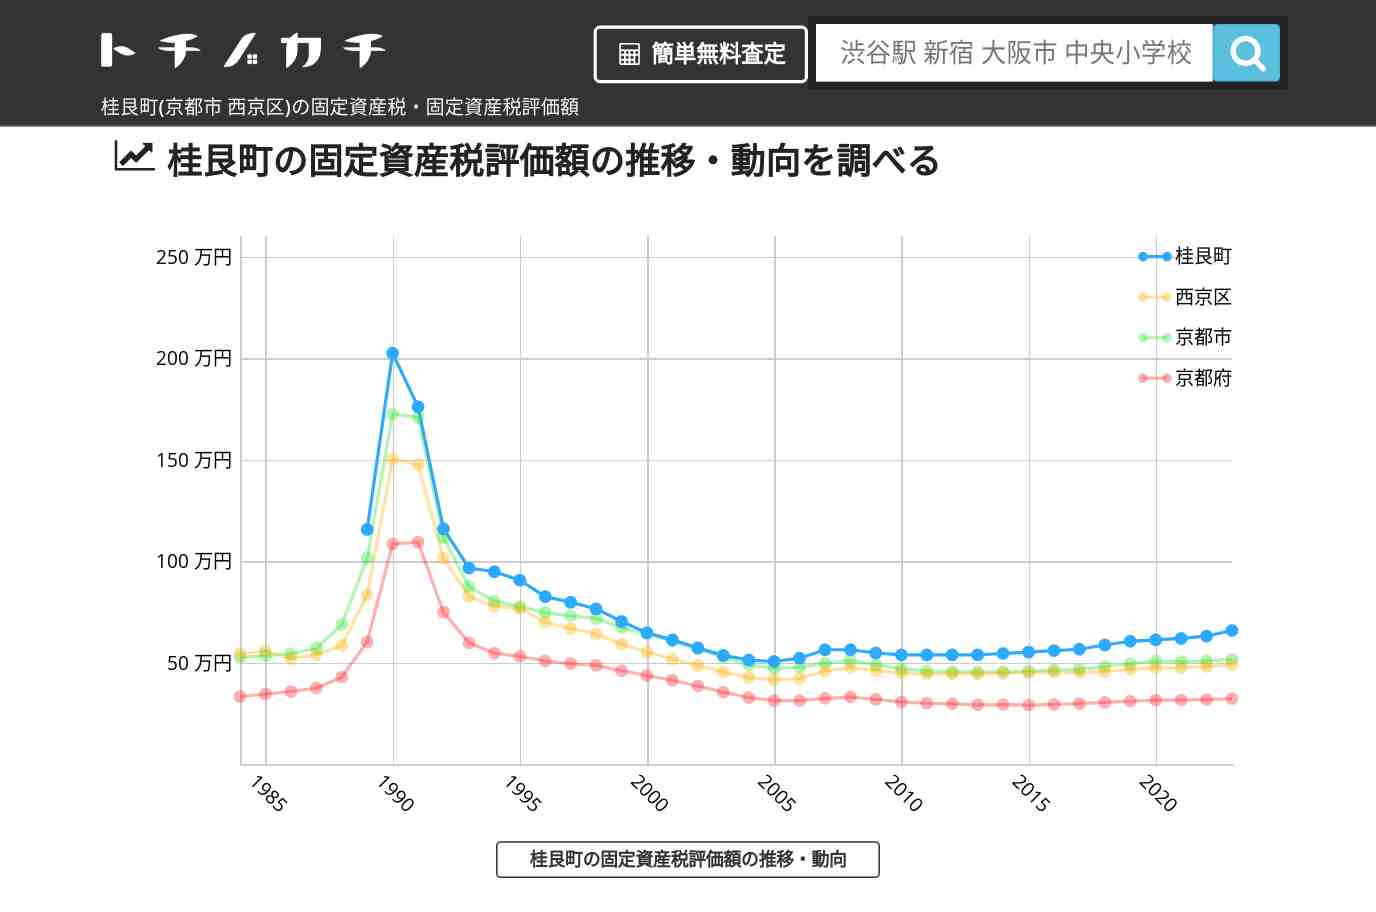 桂艮町(西京区)の固定資産税・固定資産税評価額 | トチノカチ